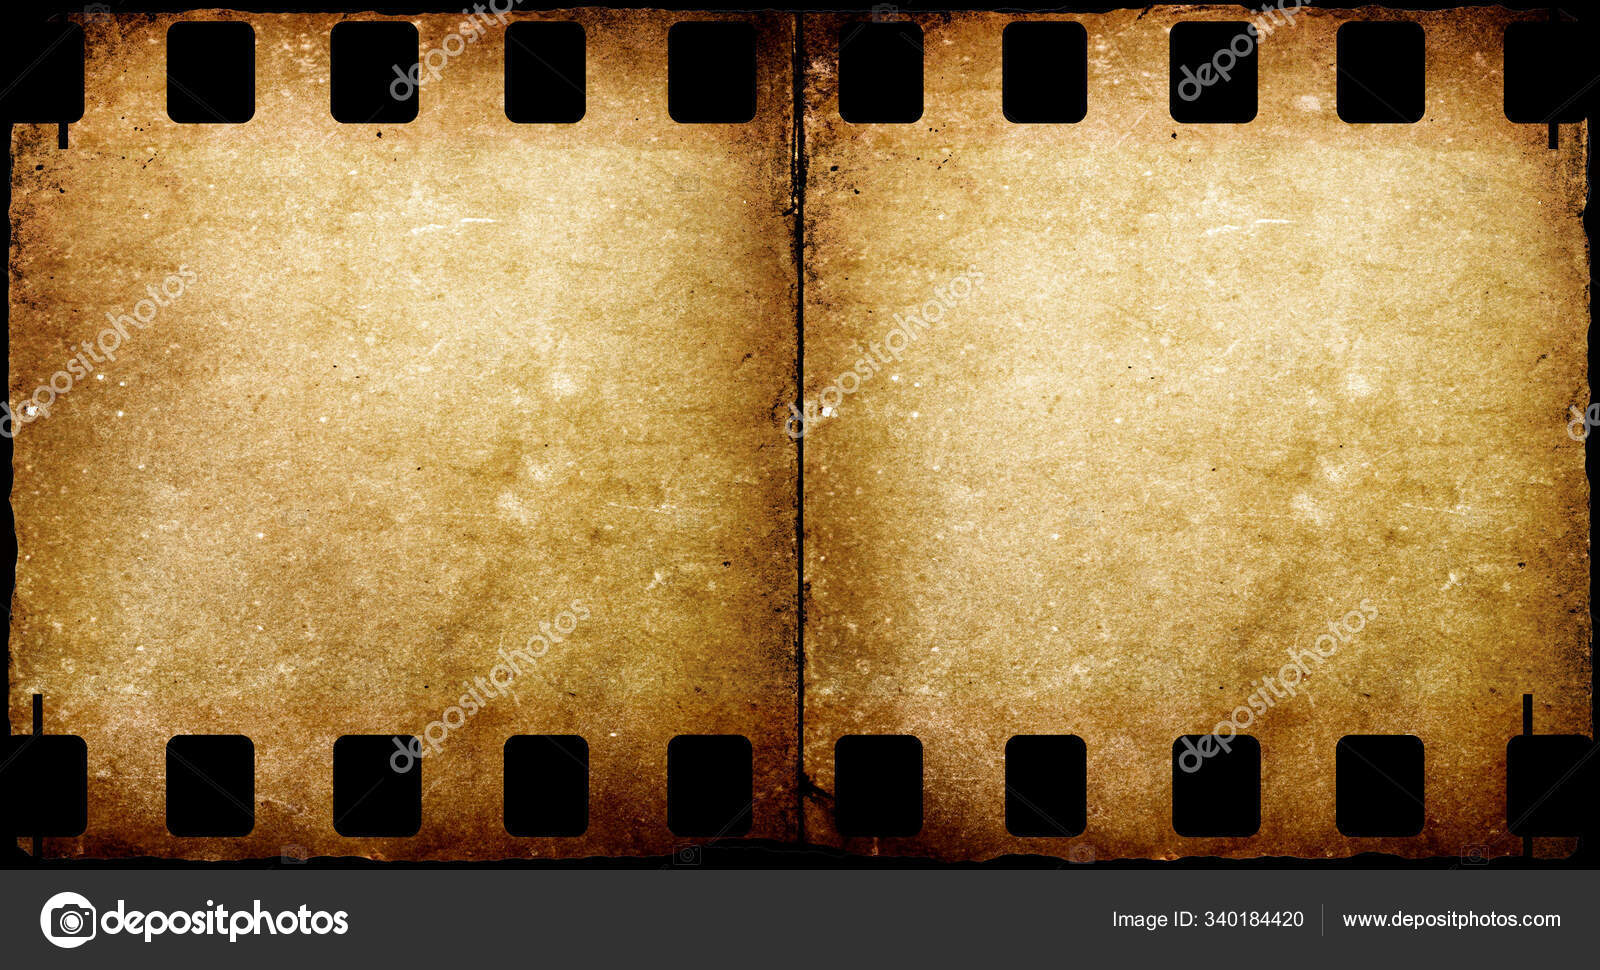 Old Movie Film Reel — Stock Photo © PantherMediaSeller #340184420